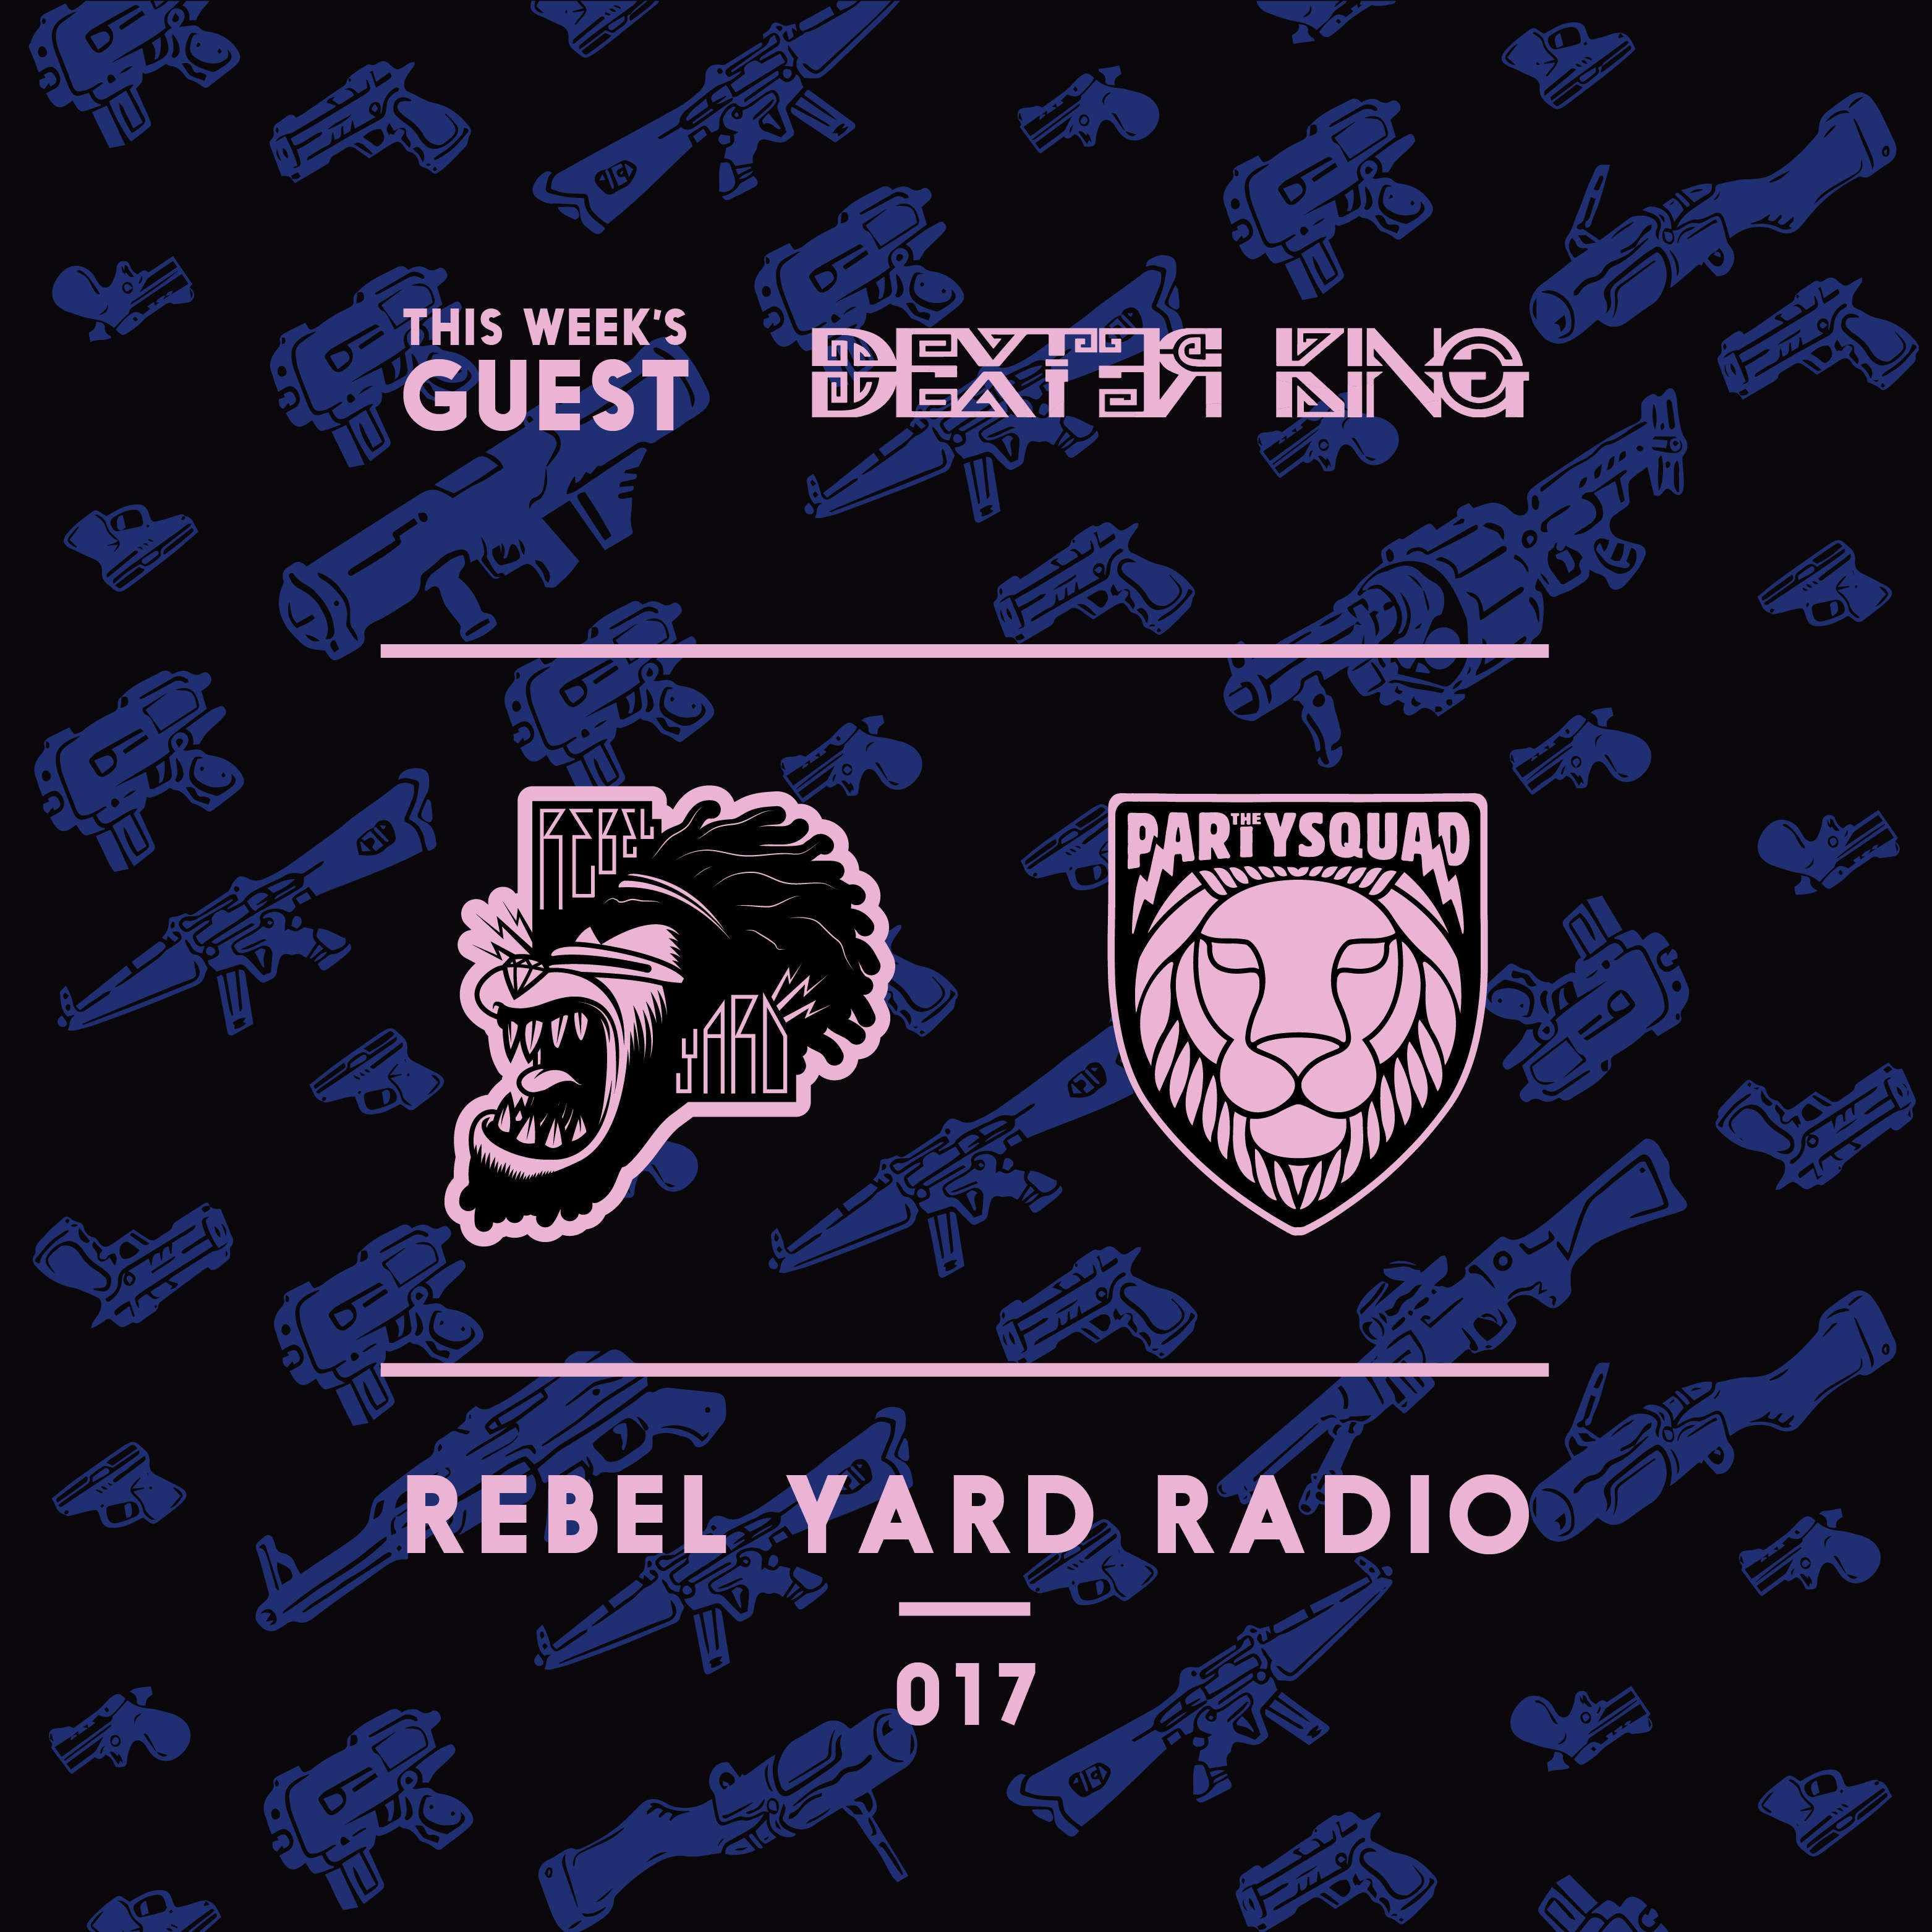 THE PARTYSQUAD PRESENTS - REBEL YARD RADIO 017 DEXTER KING